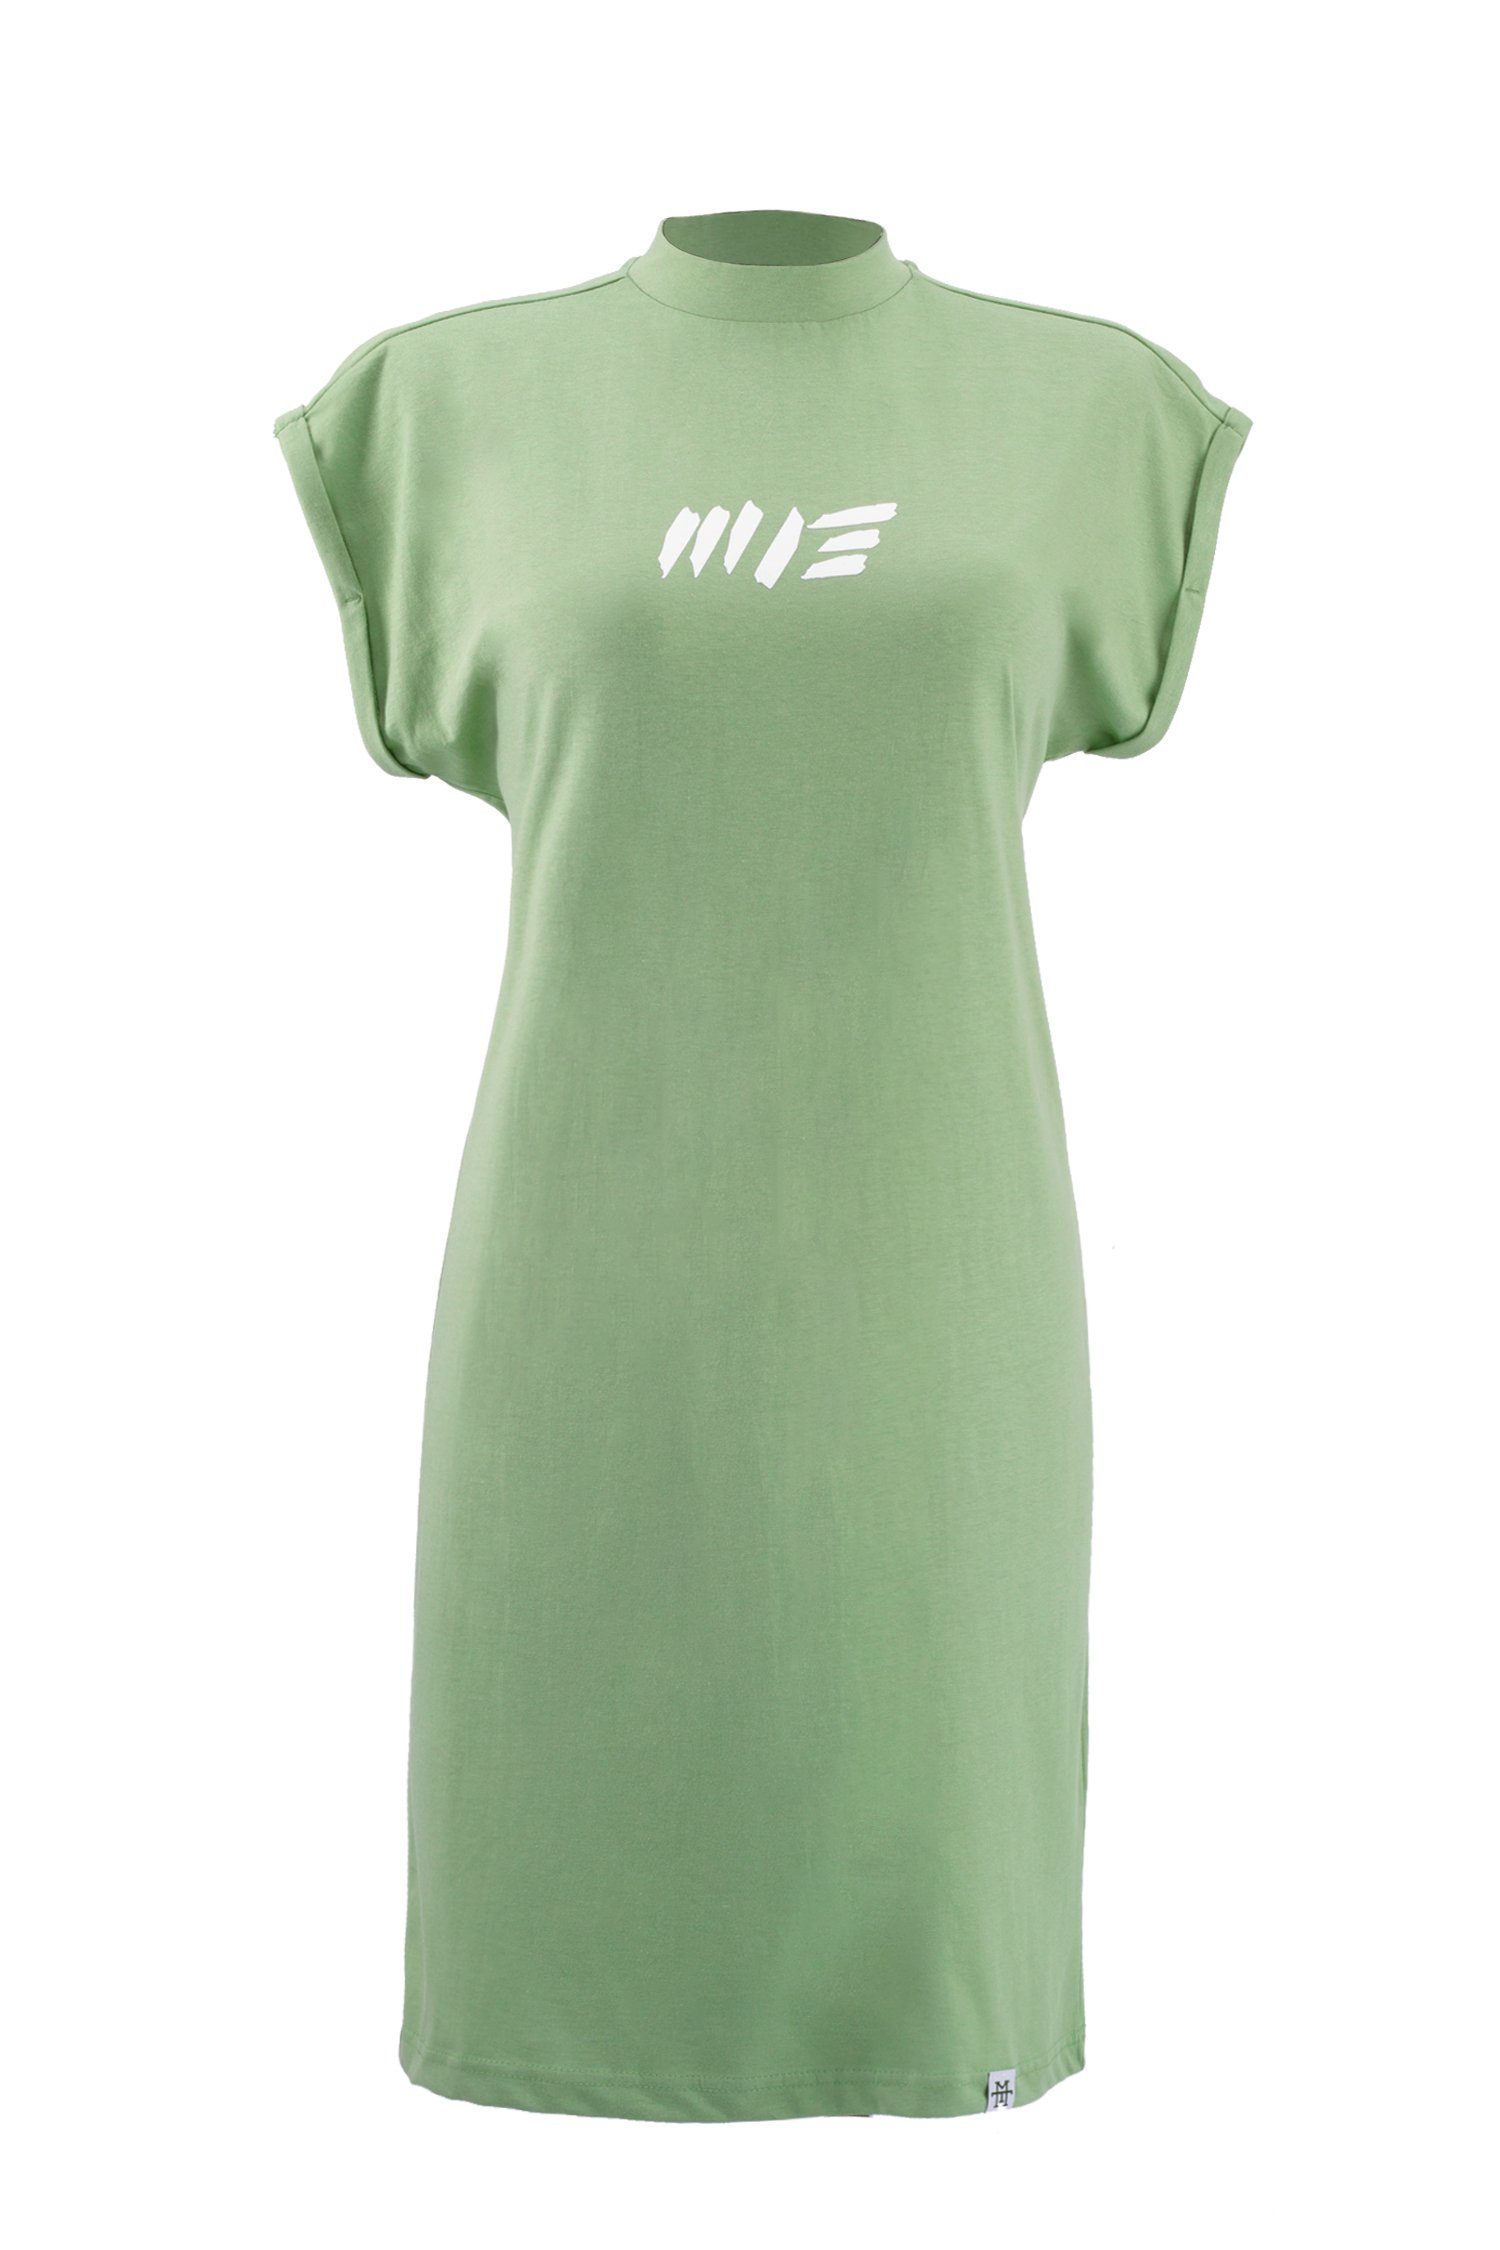 Manufaktur13 Shirtkleid Summer Tee Dress - Sommerkleid, T-Shirt Kleid, Jerseykleid 100% Baumwolle Sage